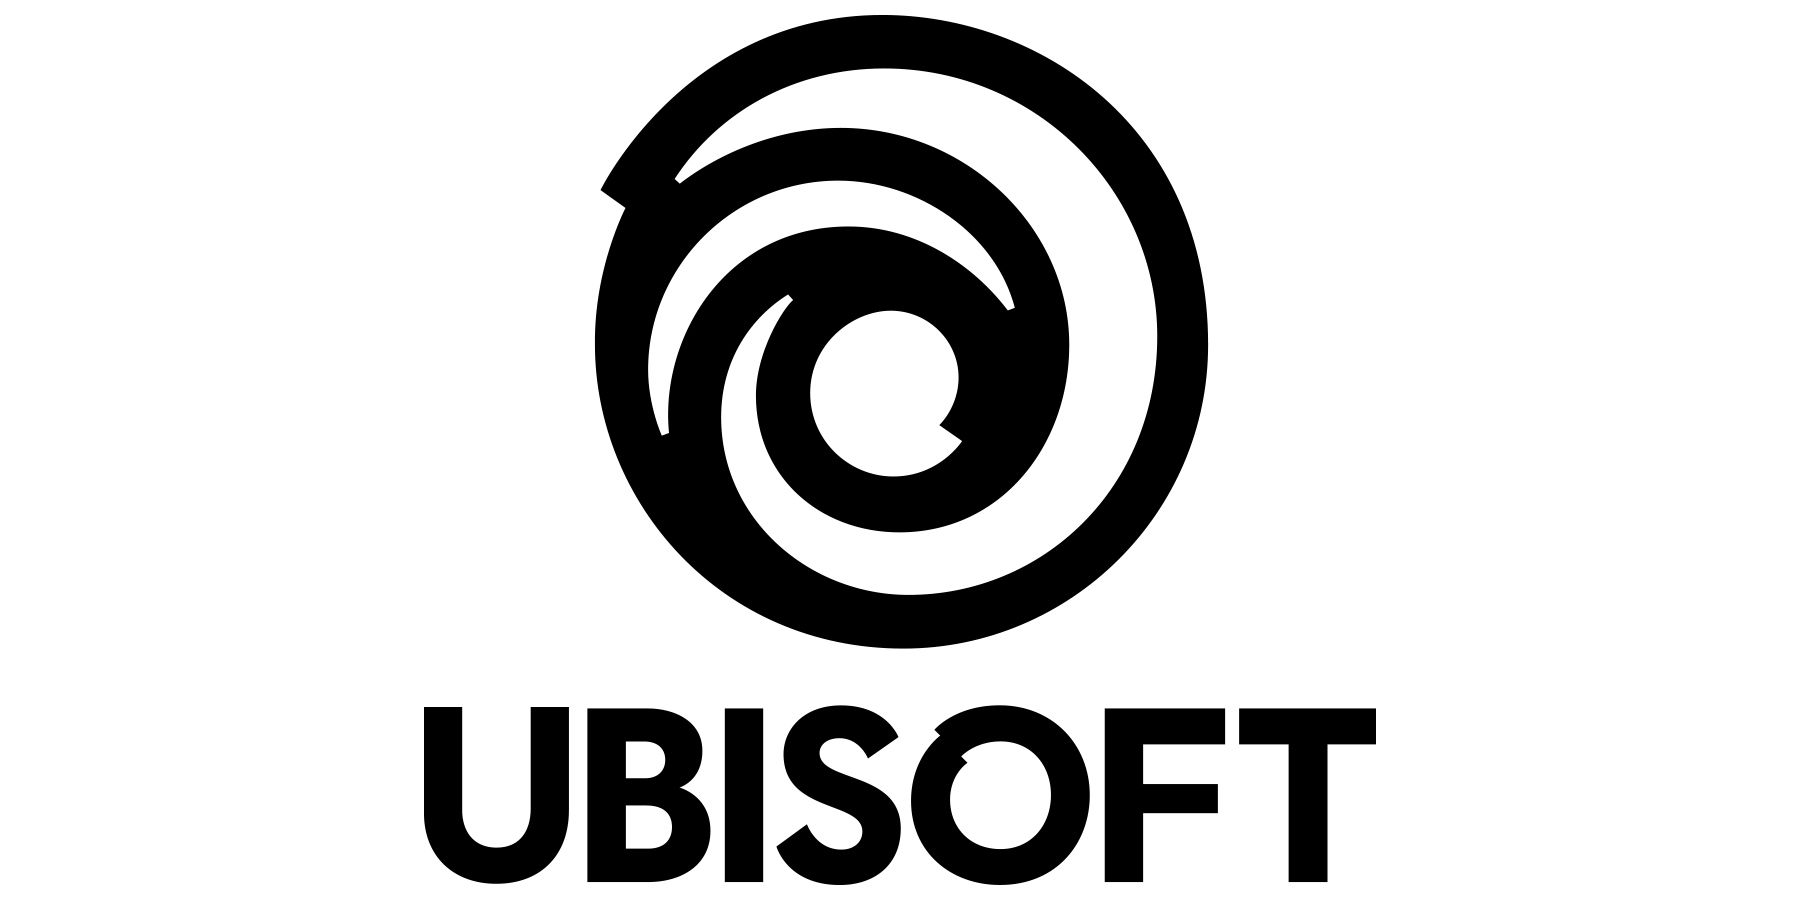 vertical Ubisoft logo on white background